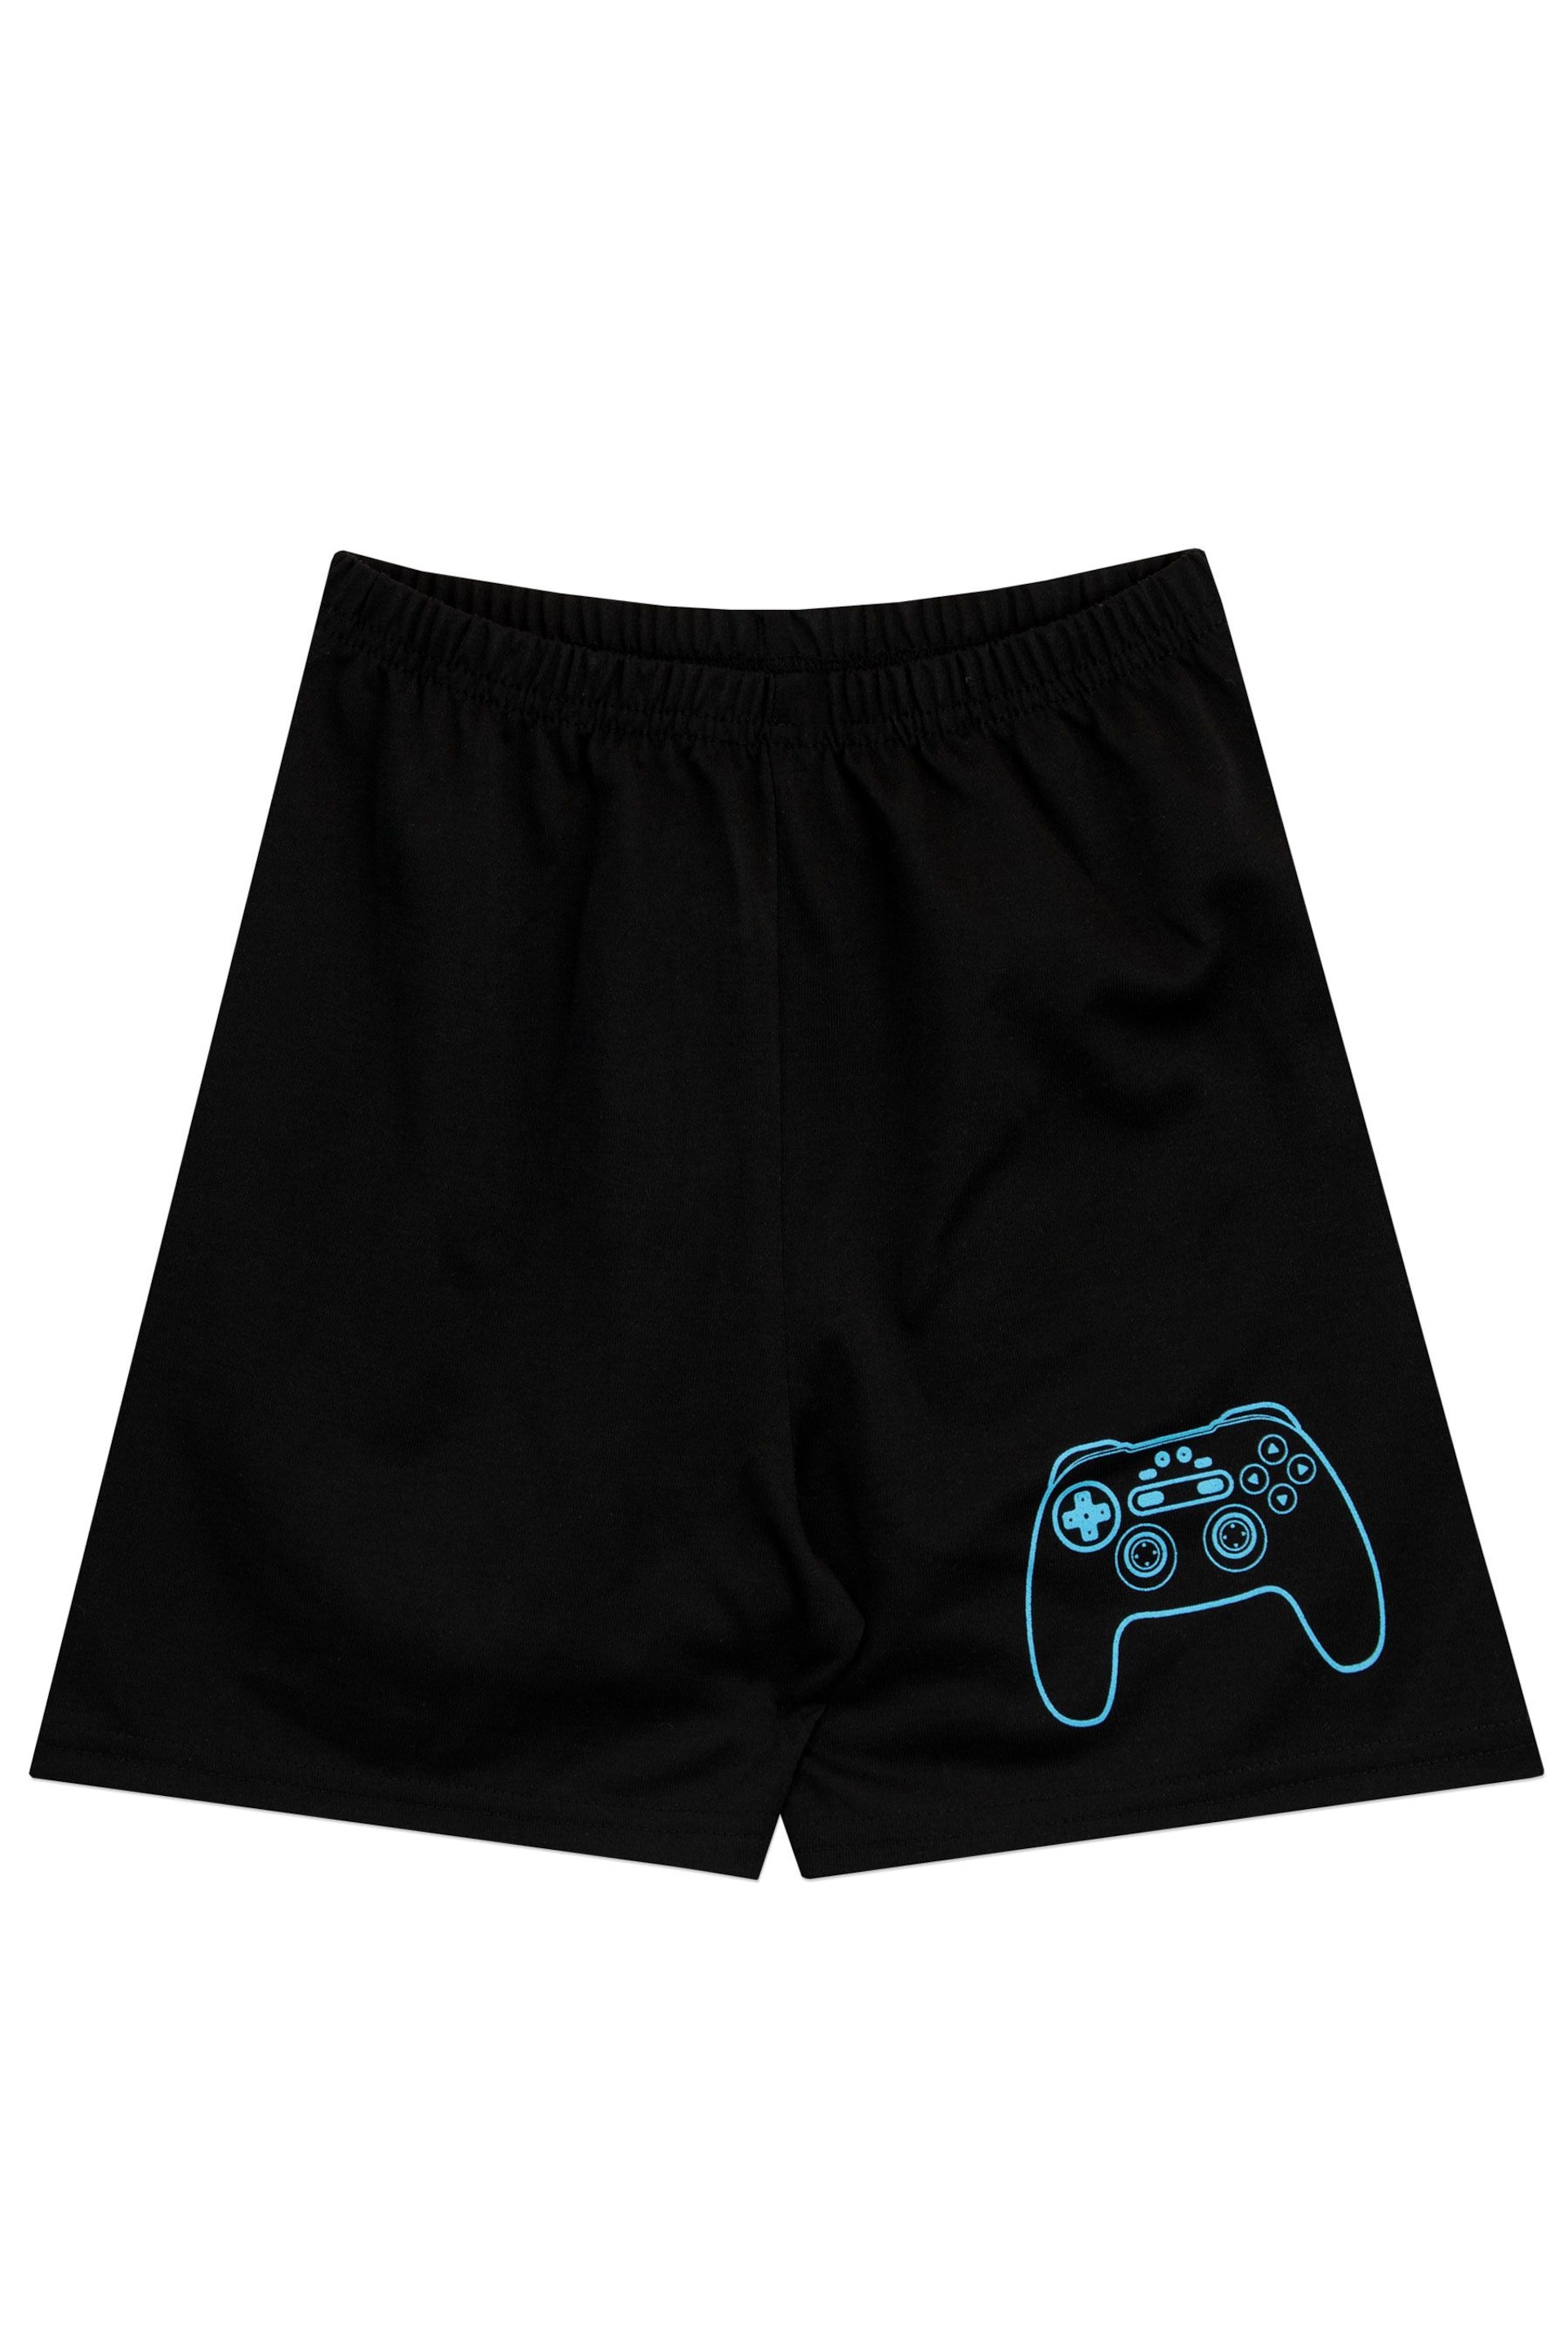 Harry Bear Black Gaming Short Pyjamas - Image 4 of 5